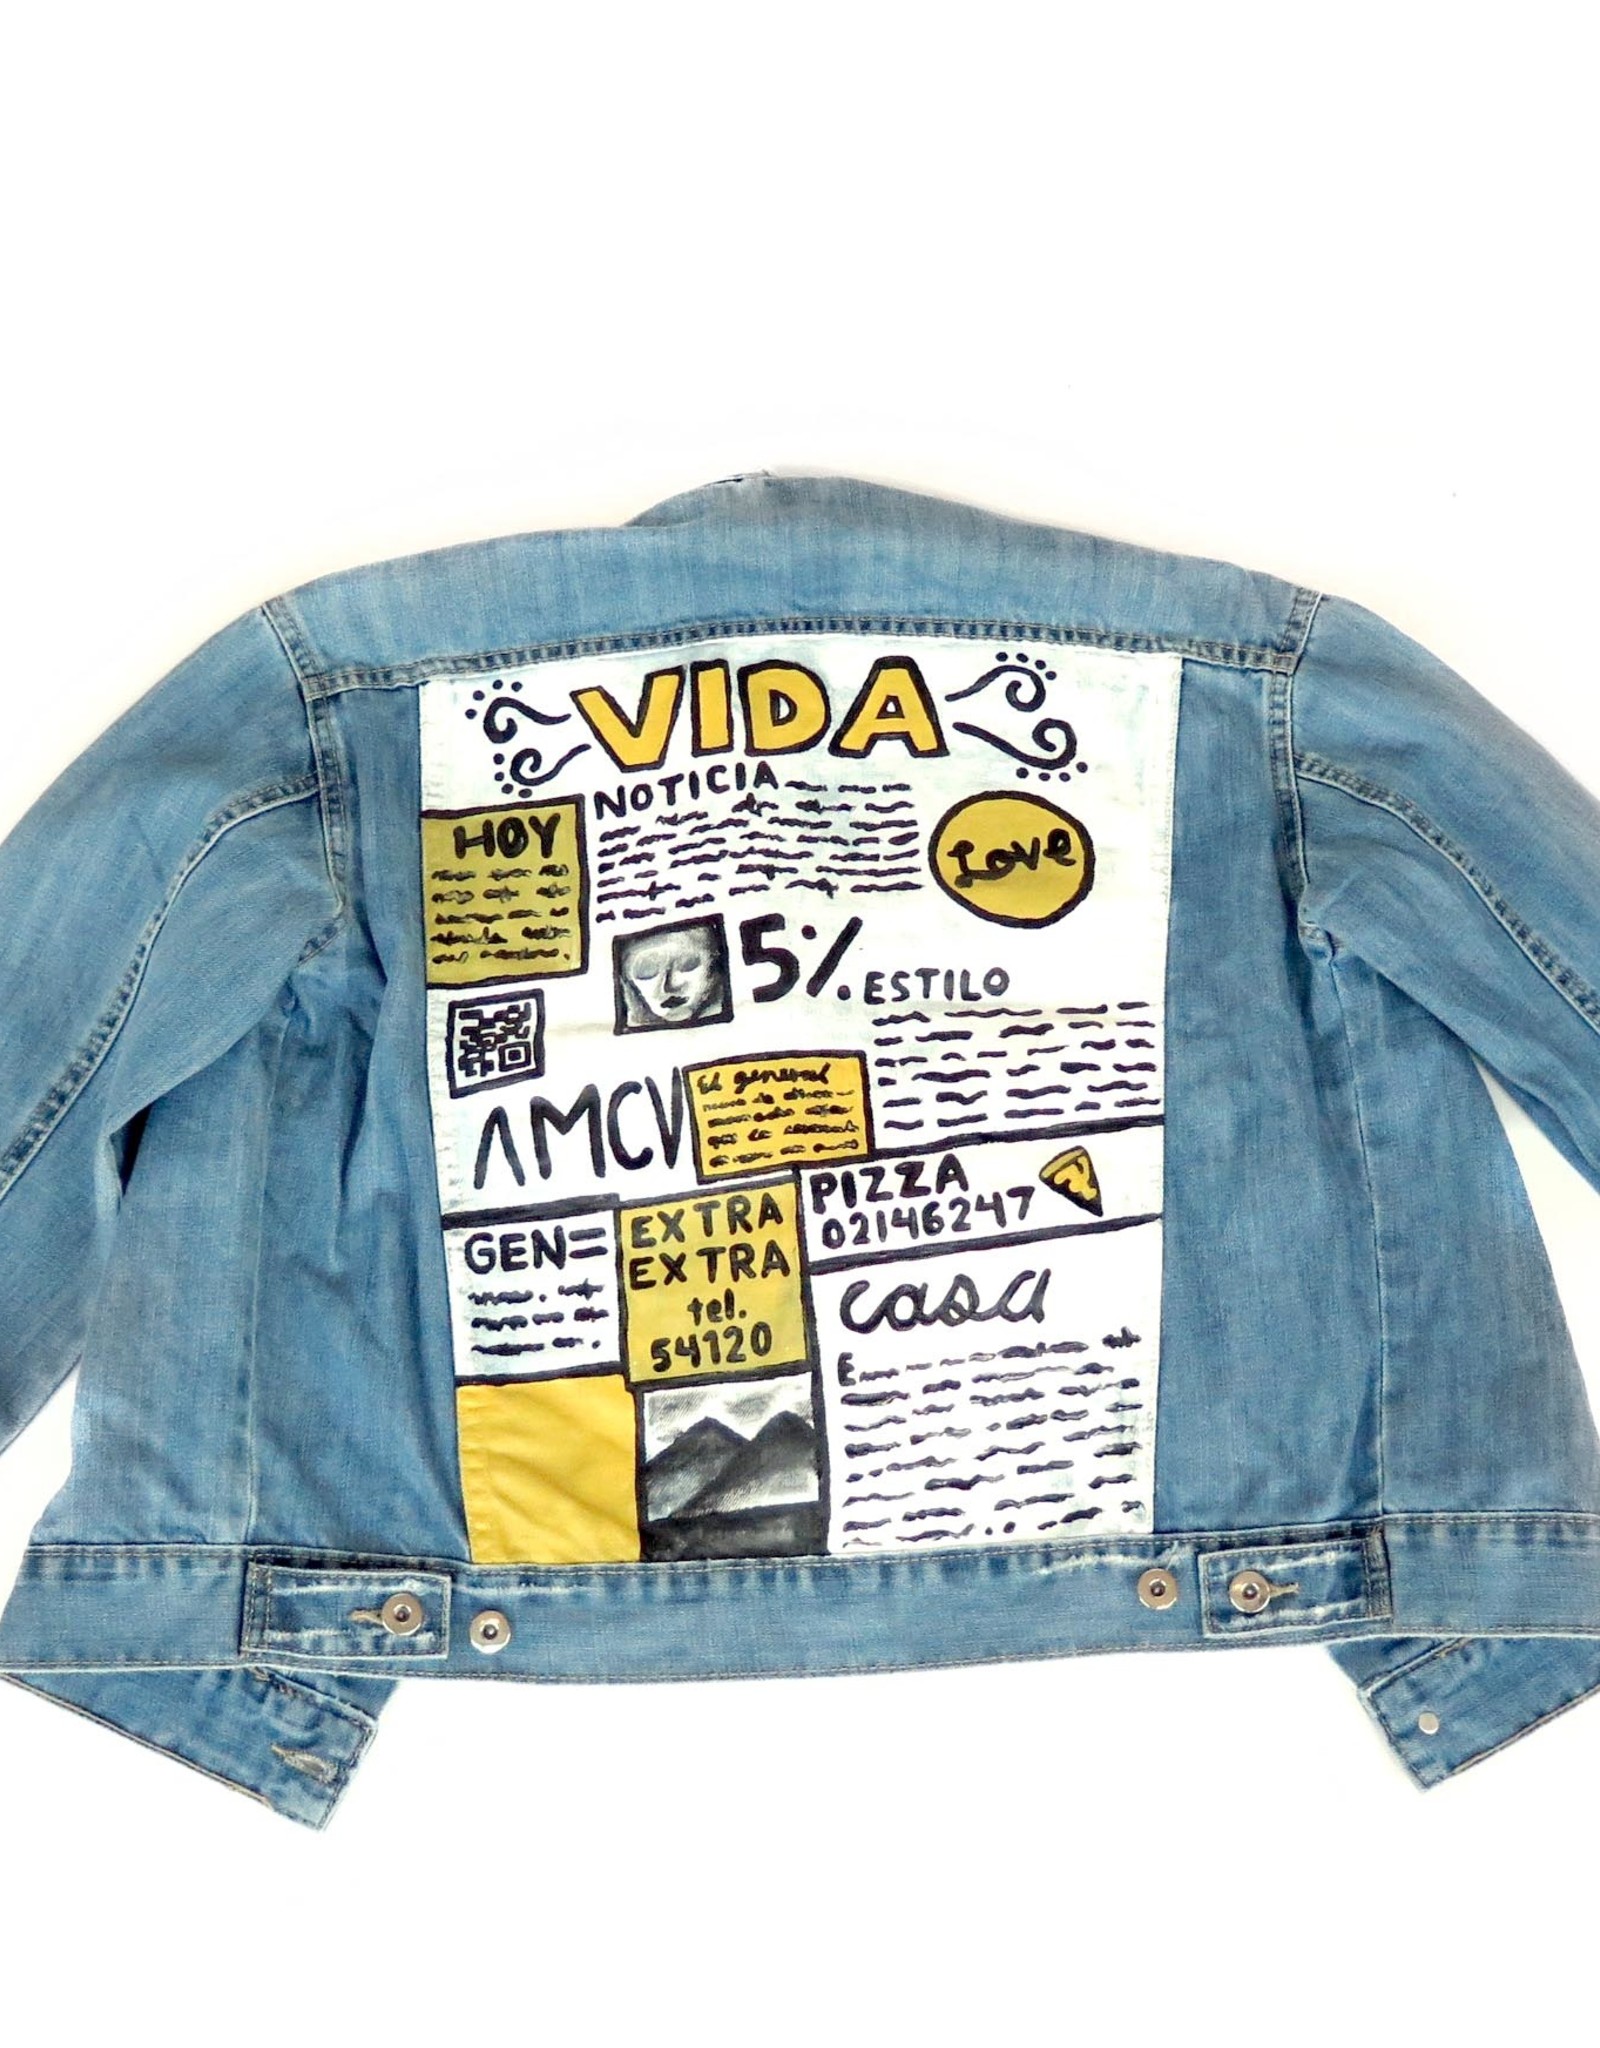 AMCV “VIDA” textile paint on denim jacket by AMCV